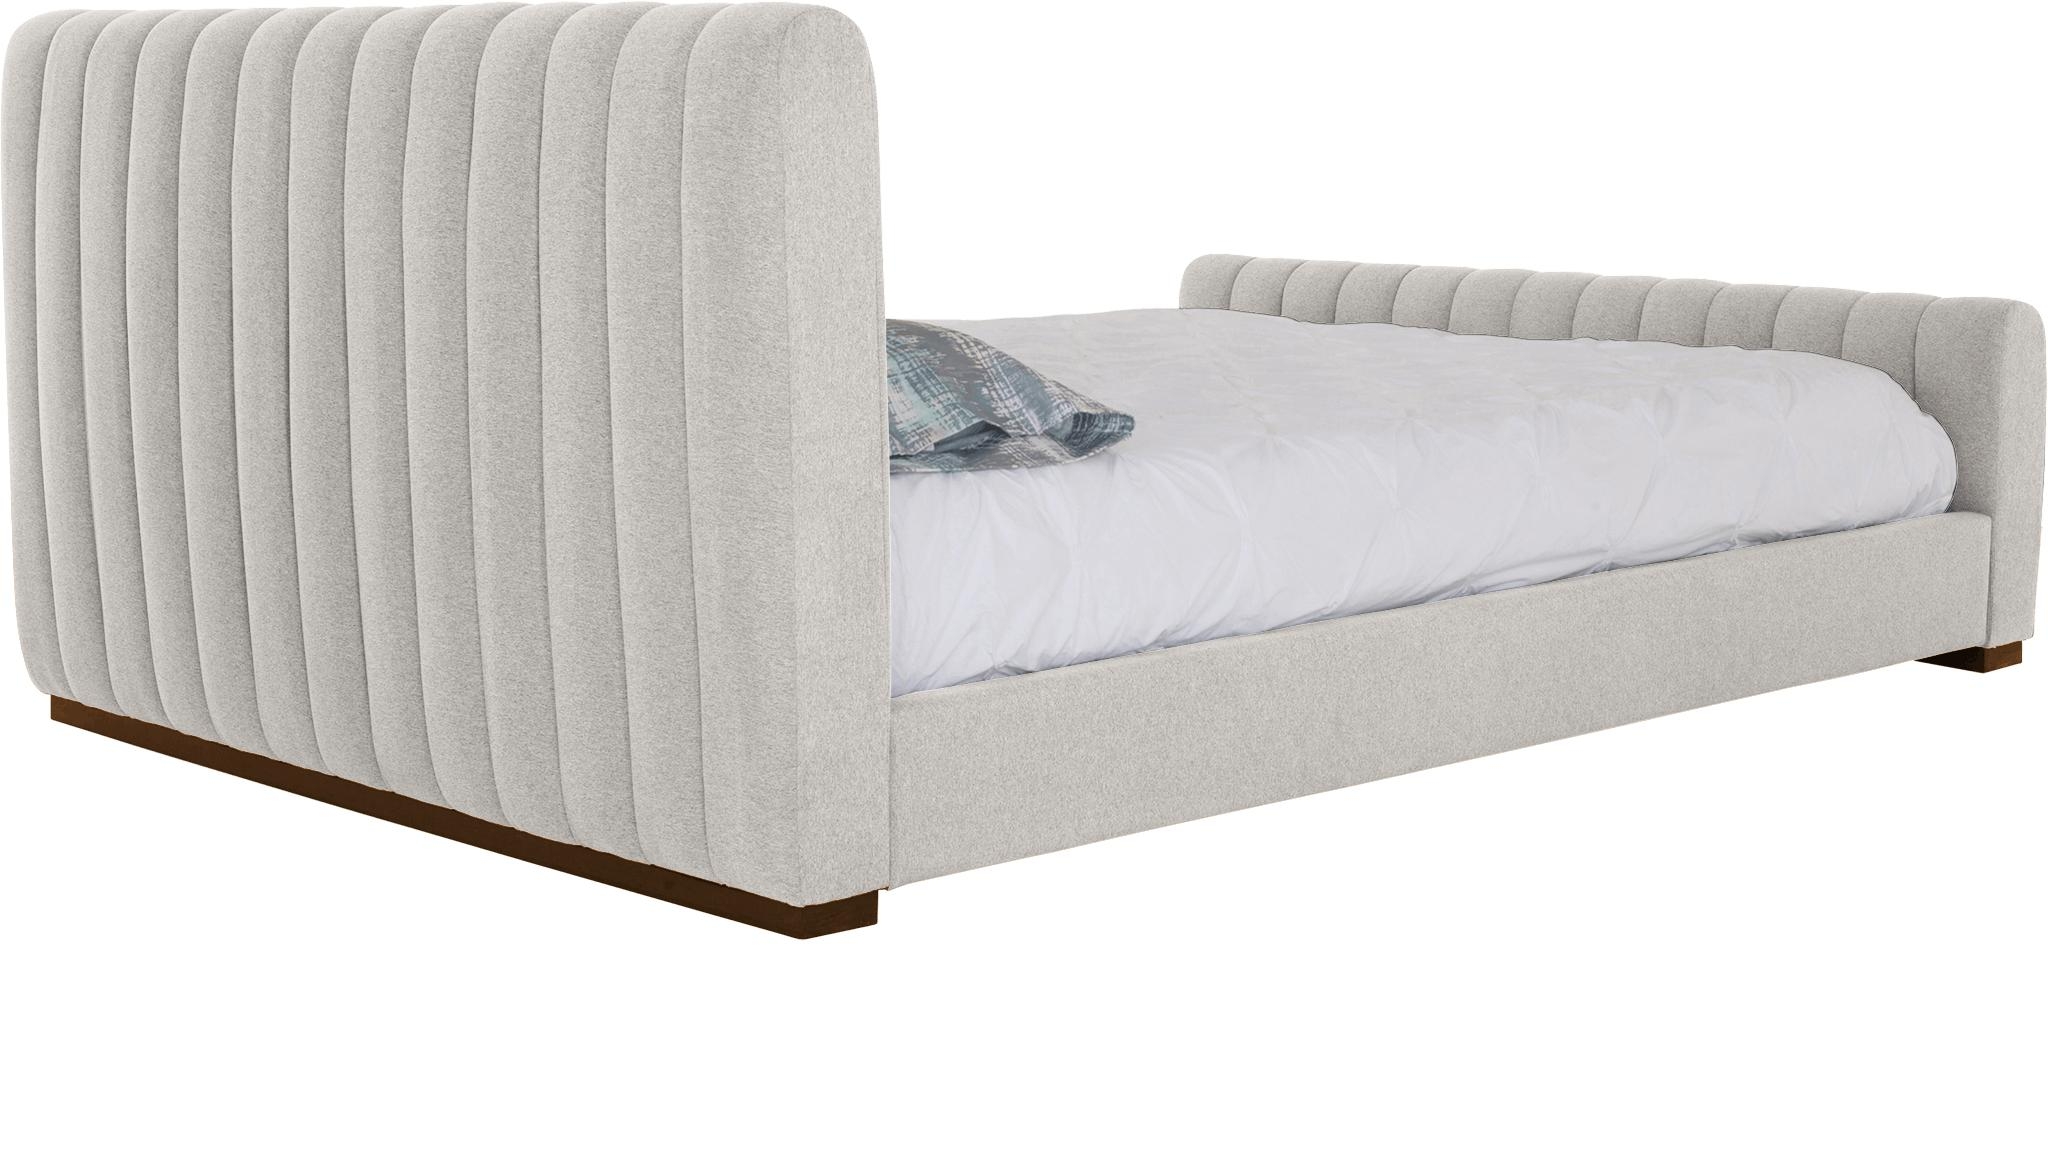 Beige/White Camille Mid Century Modern Bed - Merit Dove - Mocha - Eastern King - Image 3